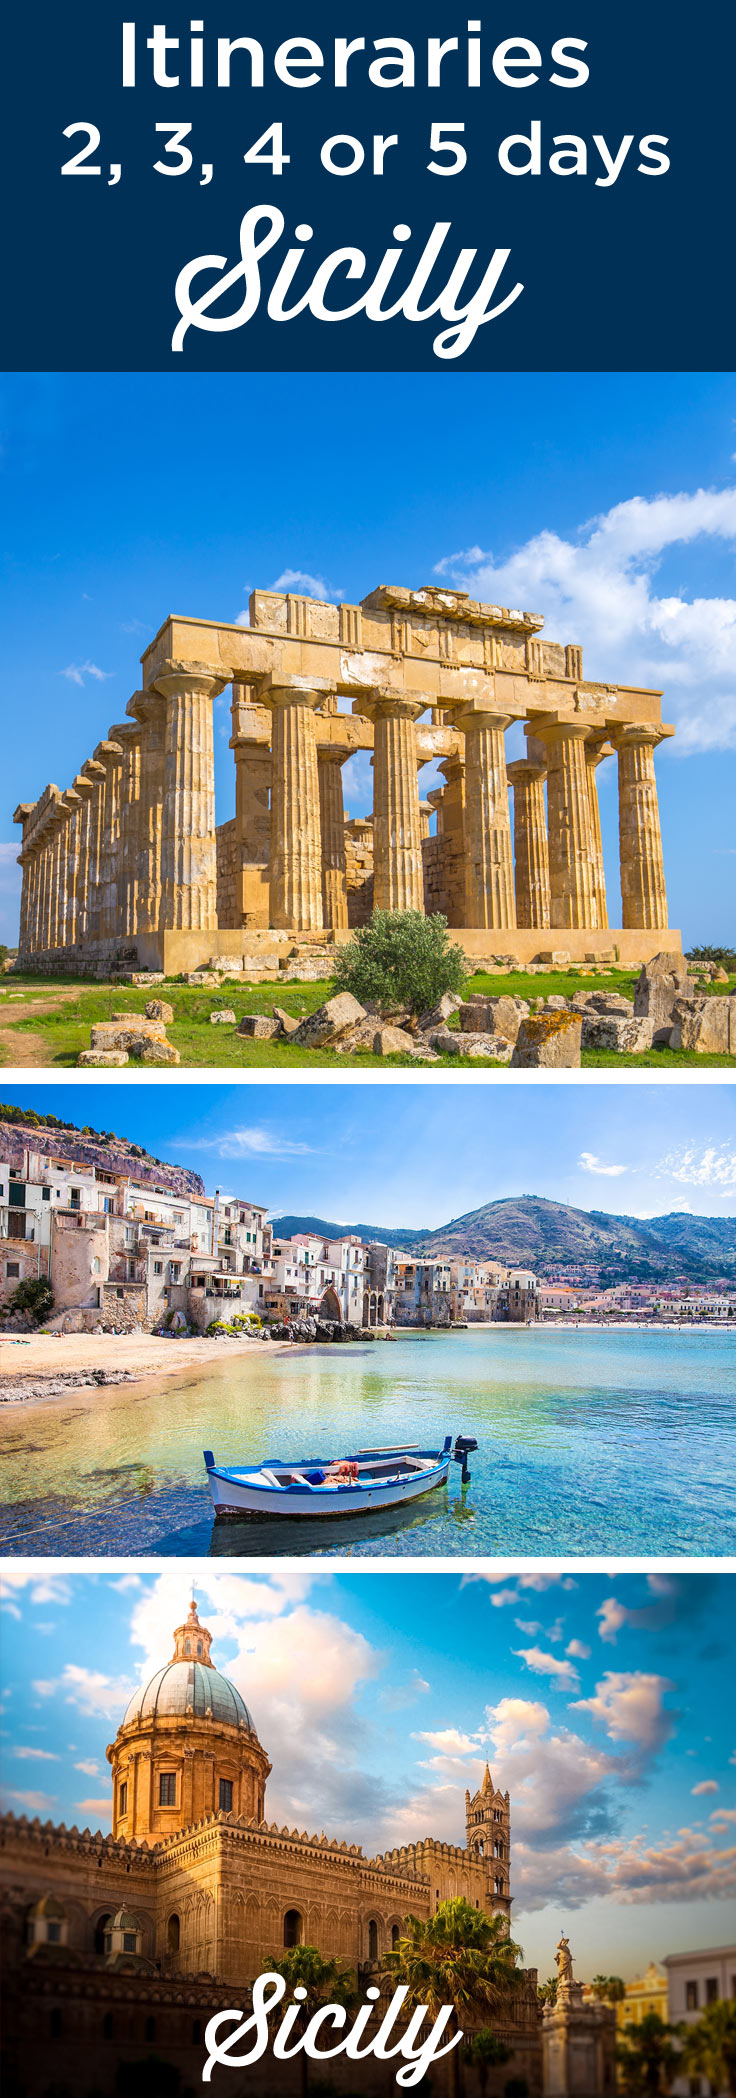 Itinerary Sicily 2 3 4 5 days